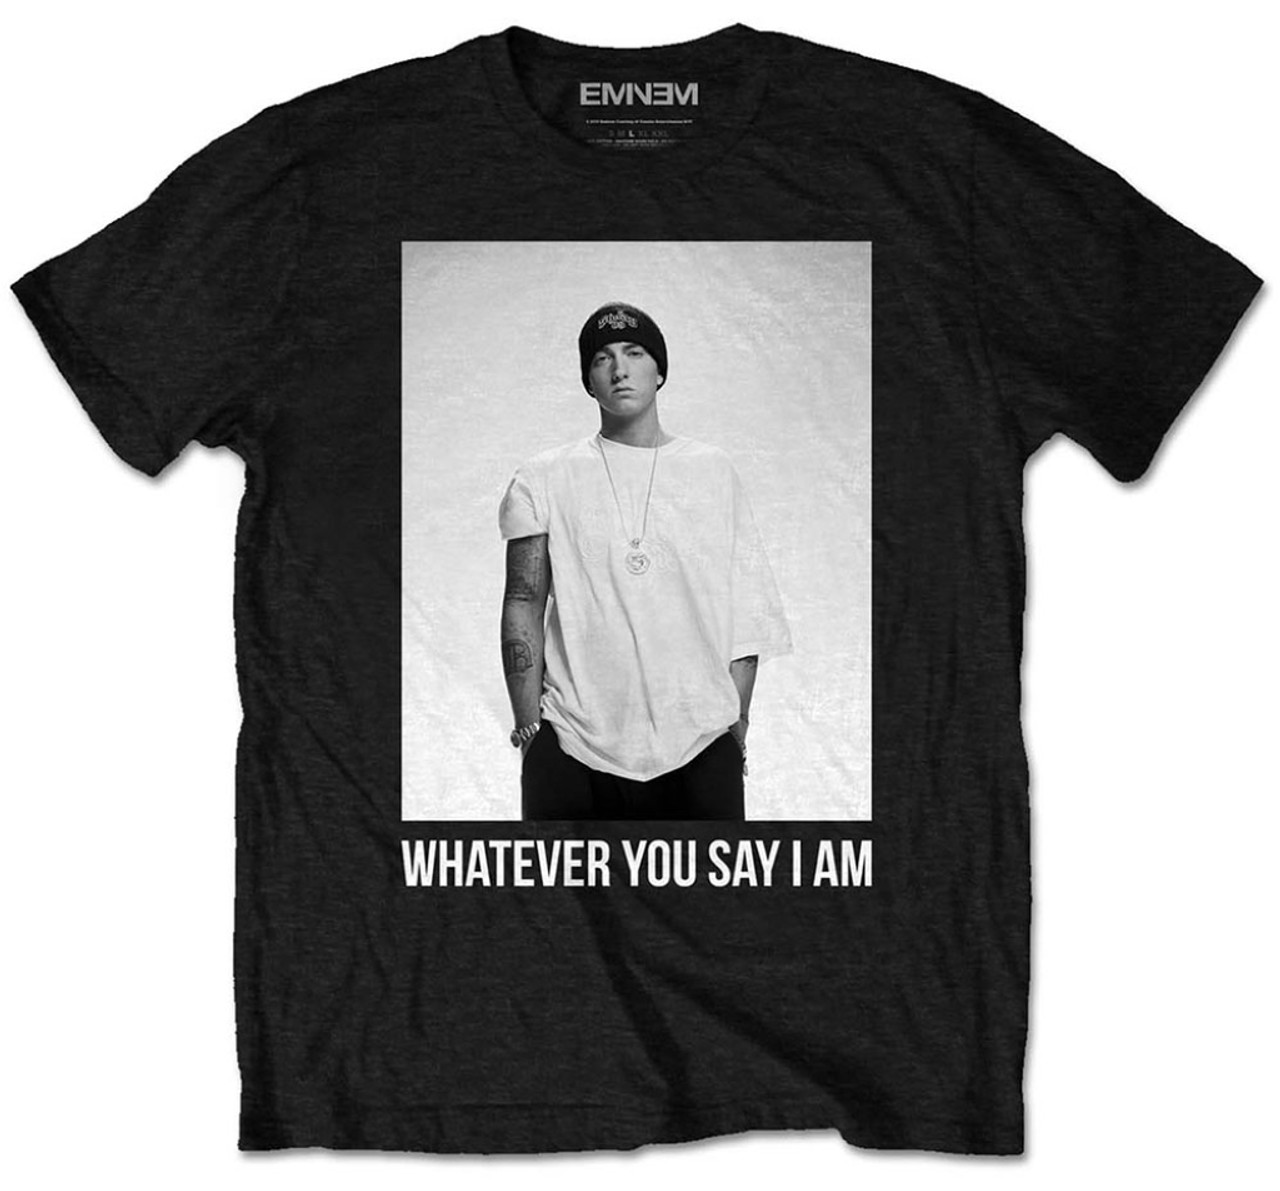 Eminem 'Whatever You Say I Am' (Black) T-Shirt